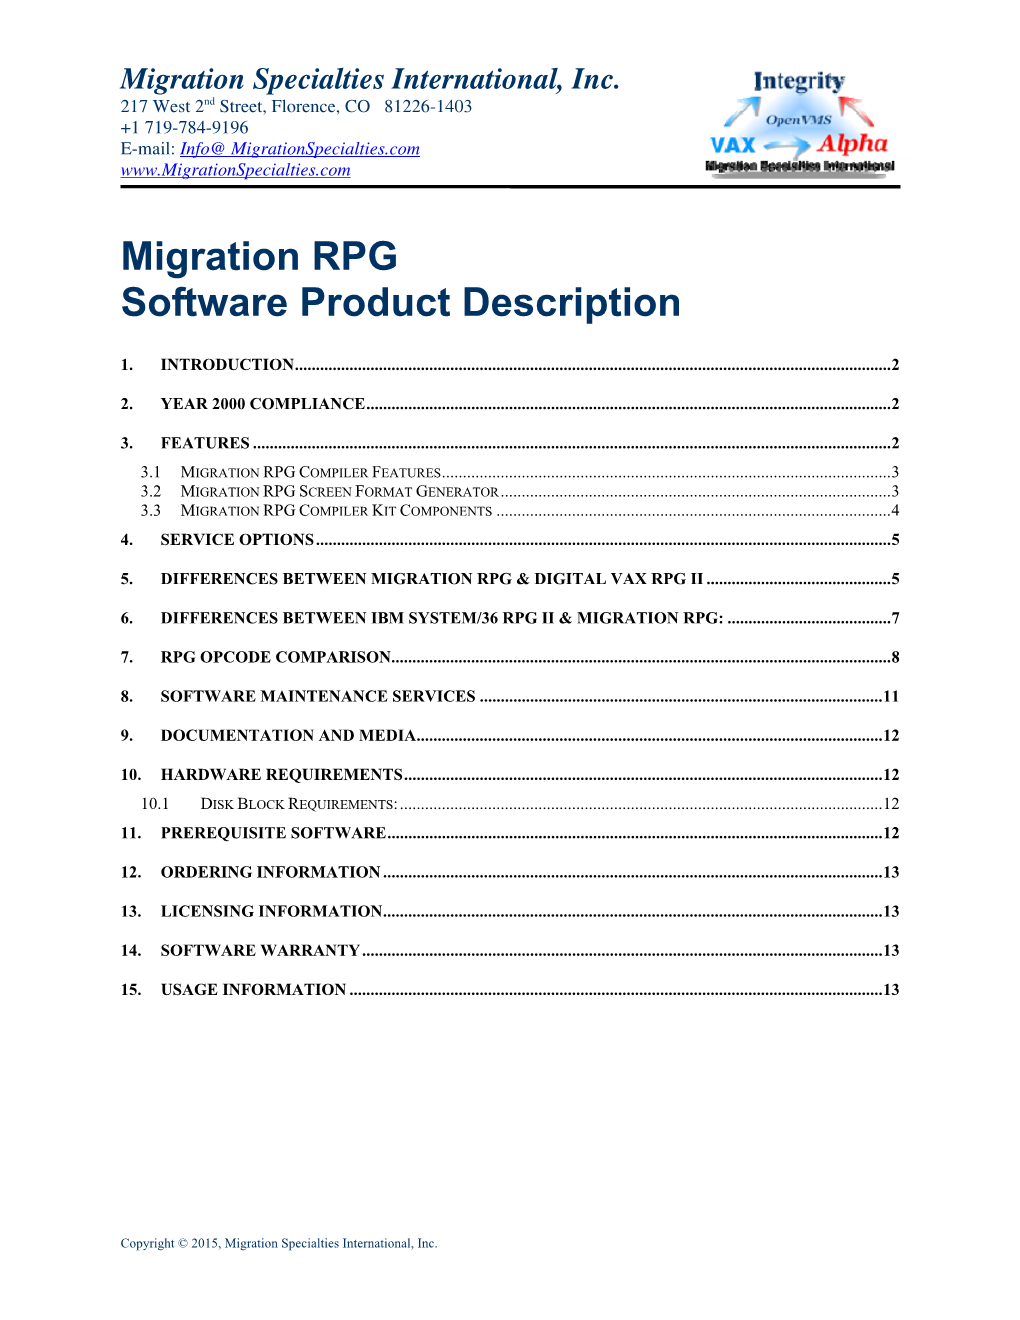 Migration RPG Software Product Description